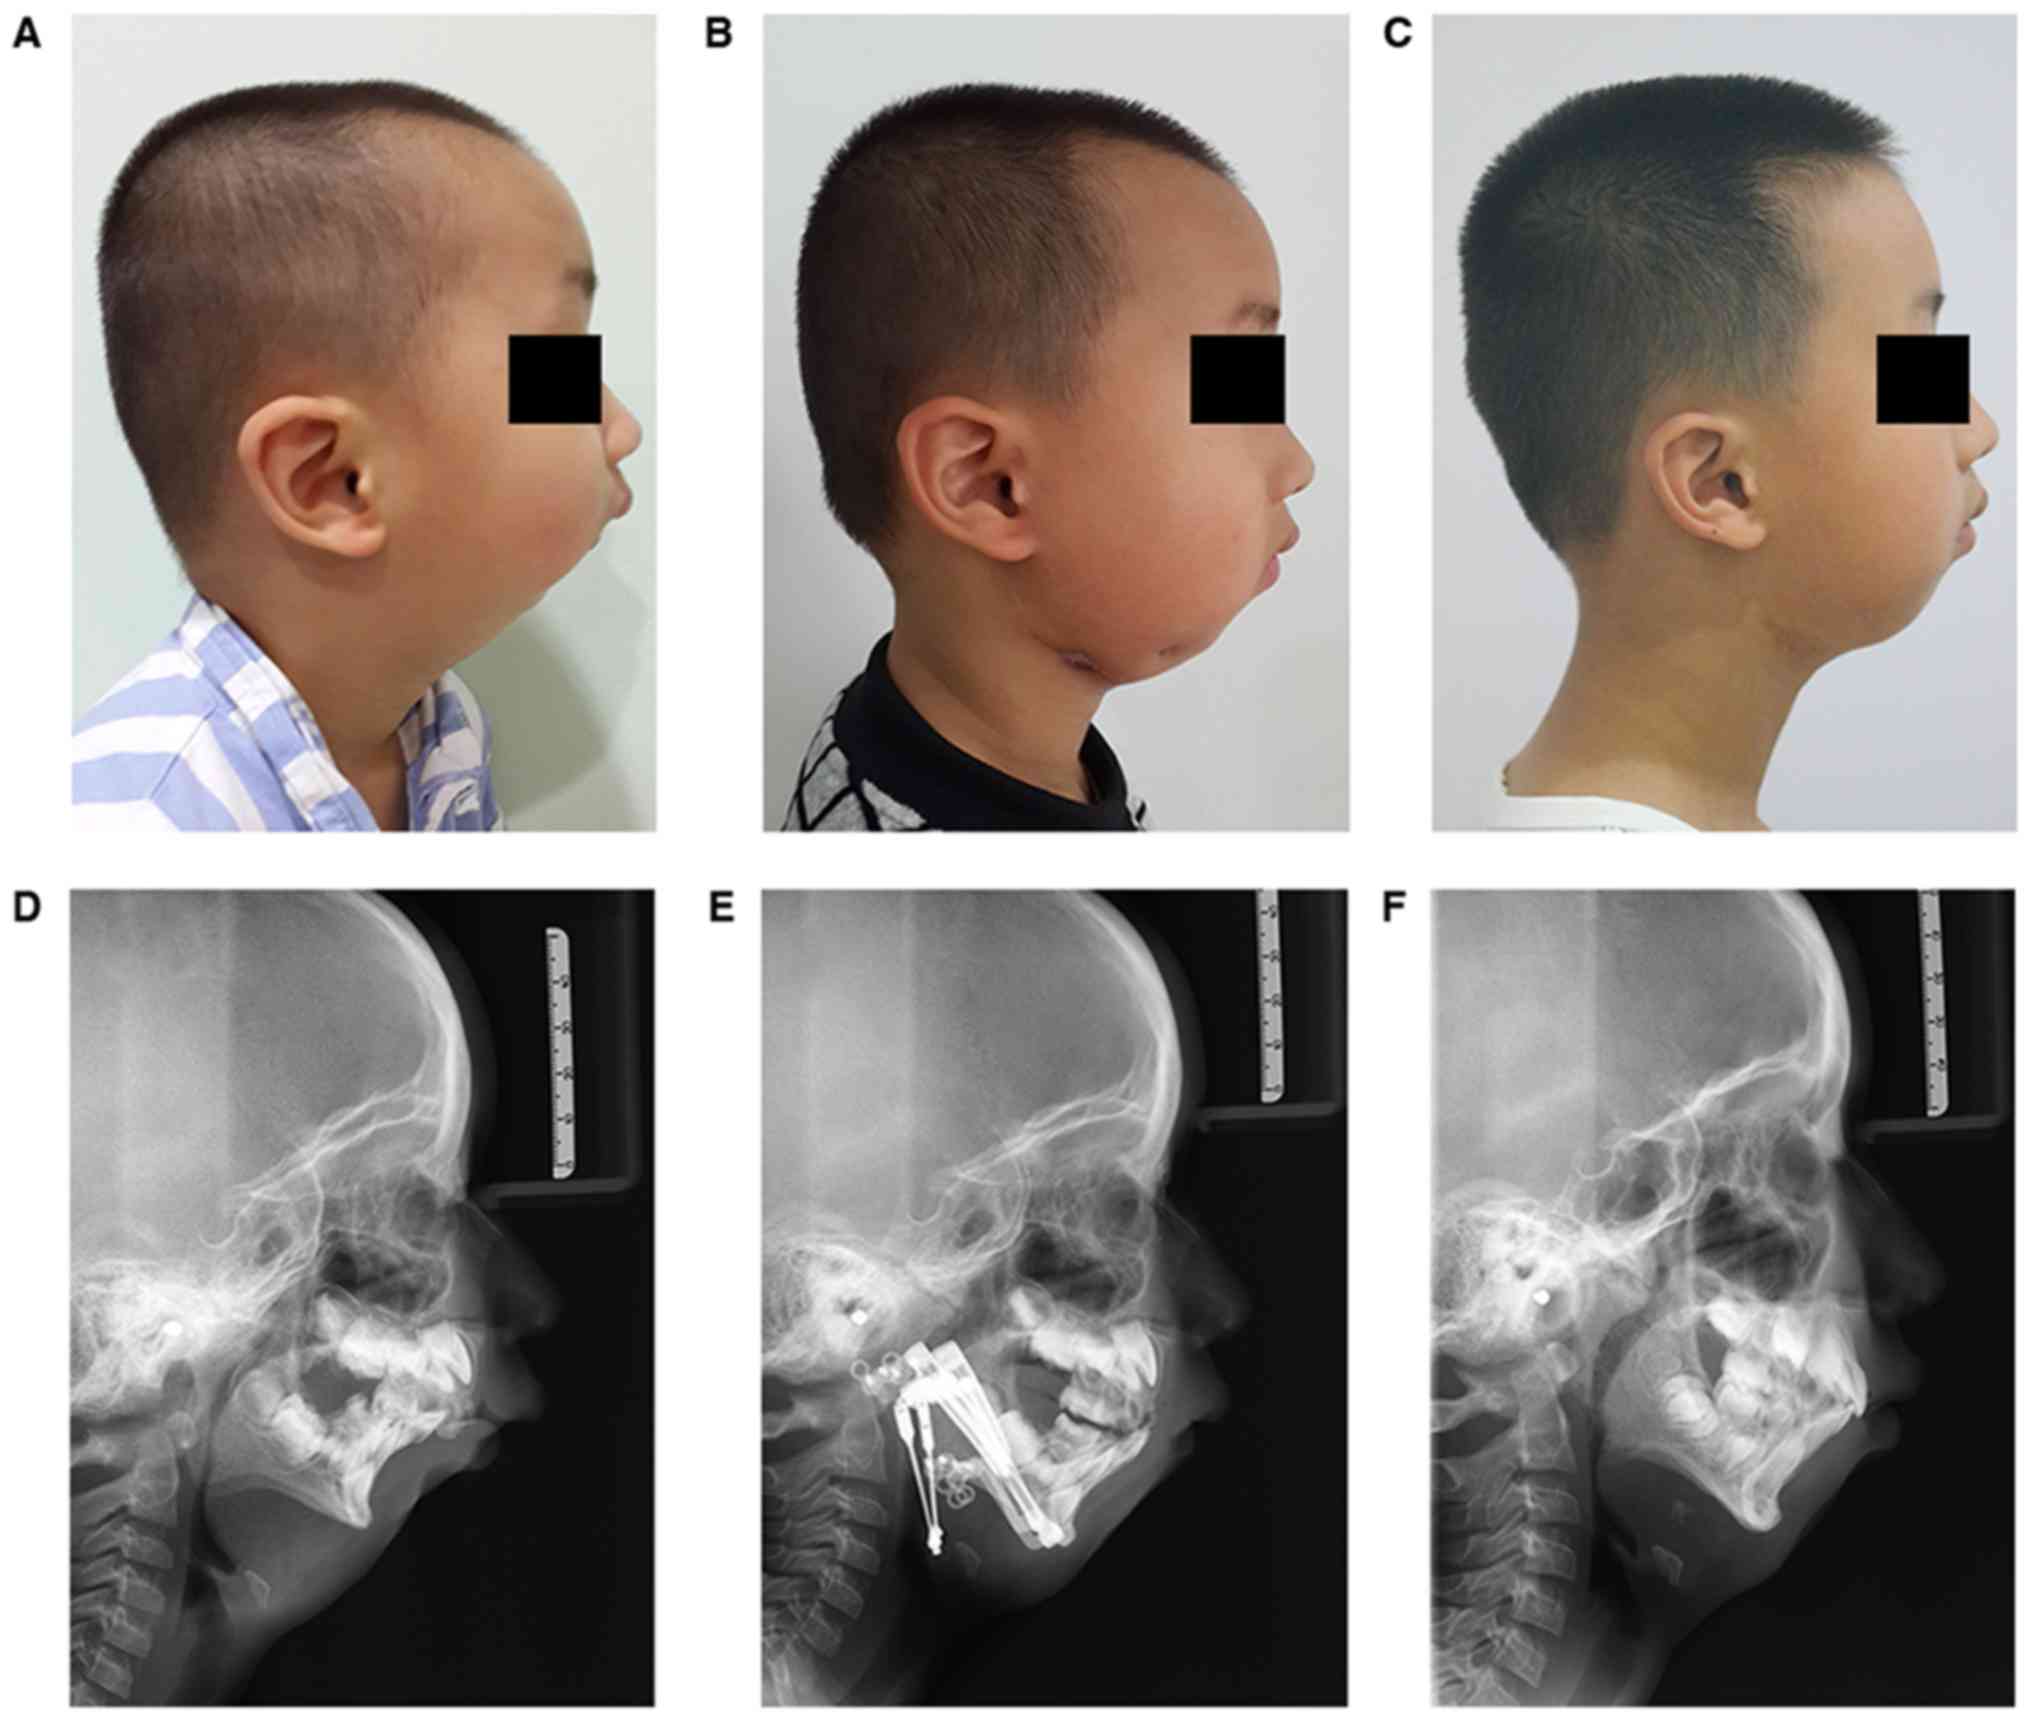 Mandibular Distraction Osteogenesis In The Treatment Of Pediatric